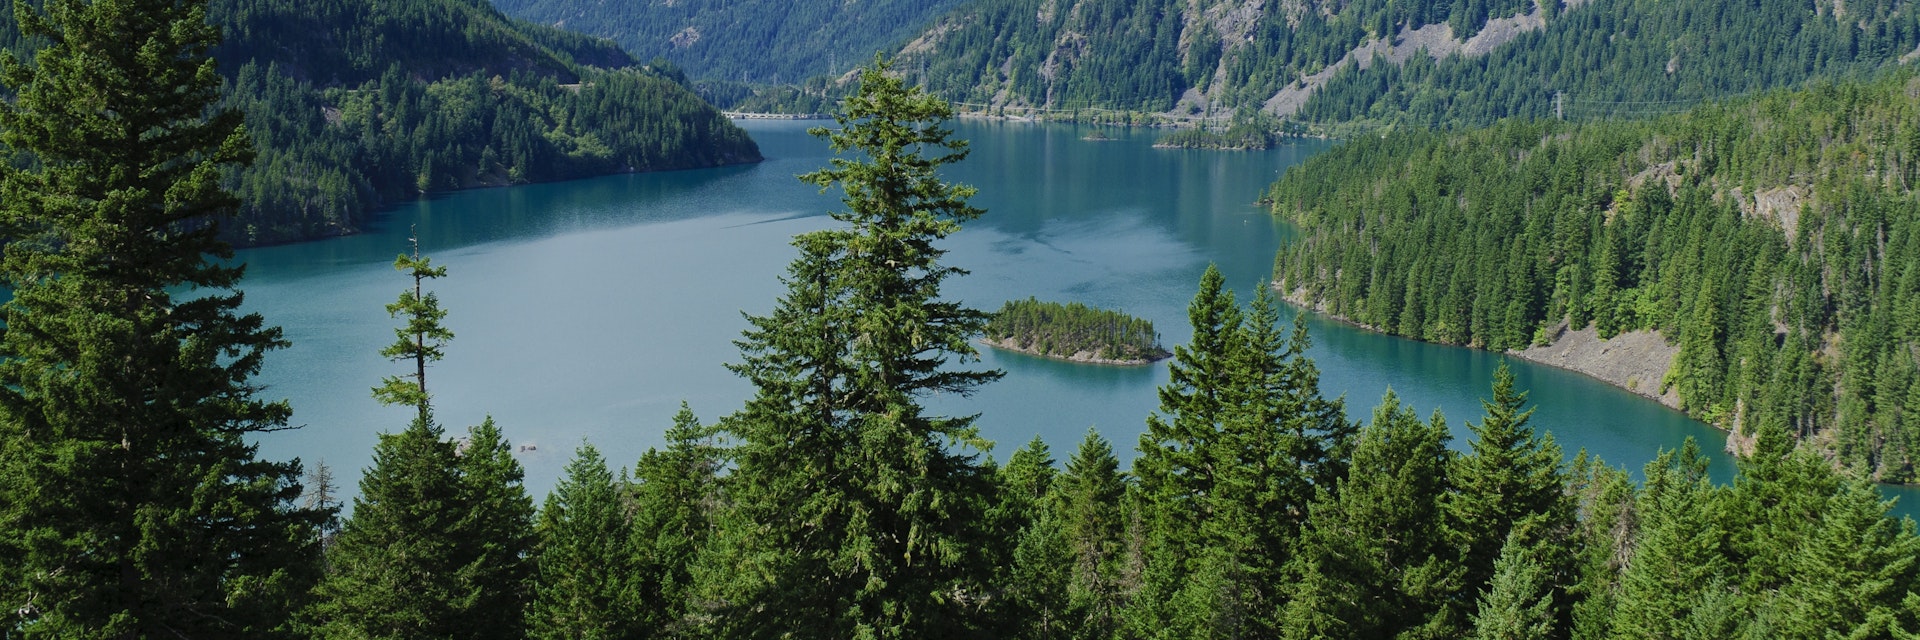 USA, Washington State, North Cascades, Ross Lake National Recreation Area, Diablo Lake and Davis Peak from Diable Lake Overlook